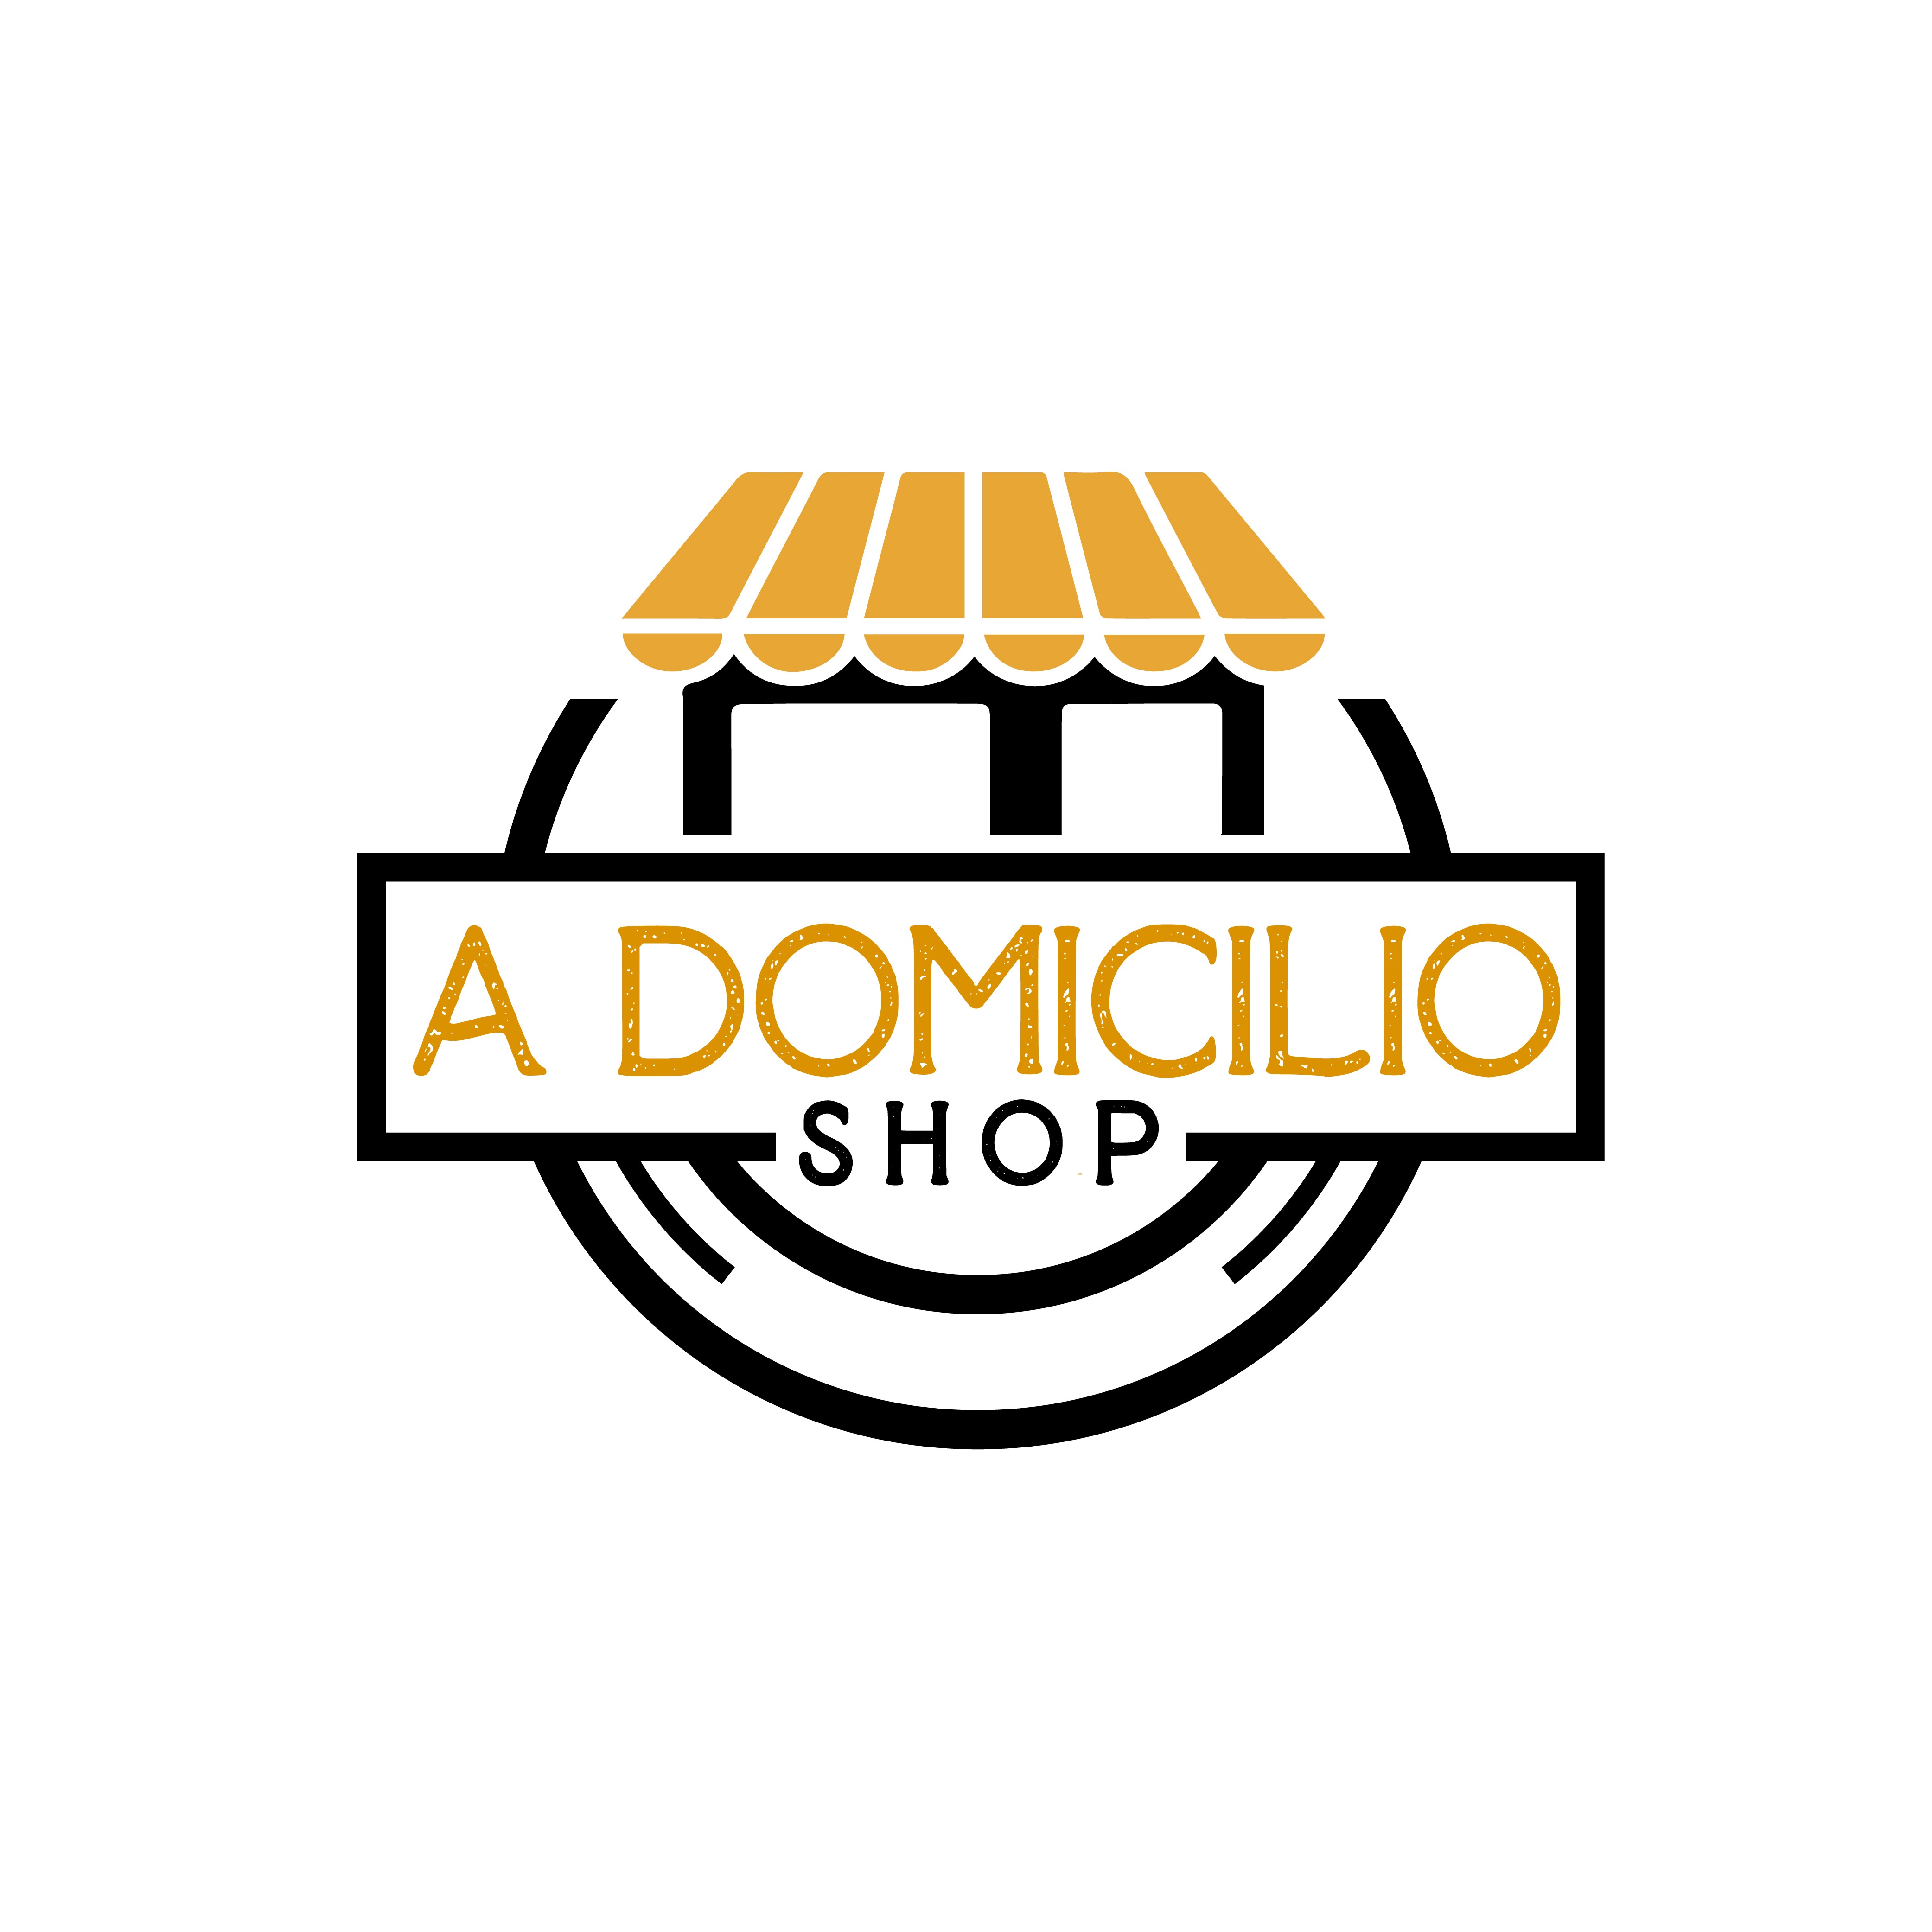 A Domicilio Shop